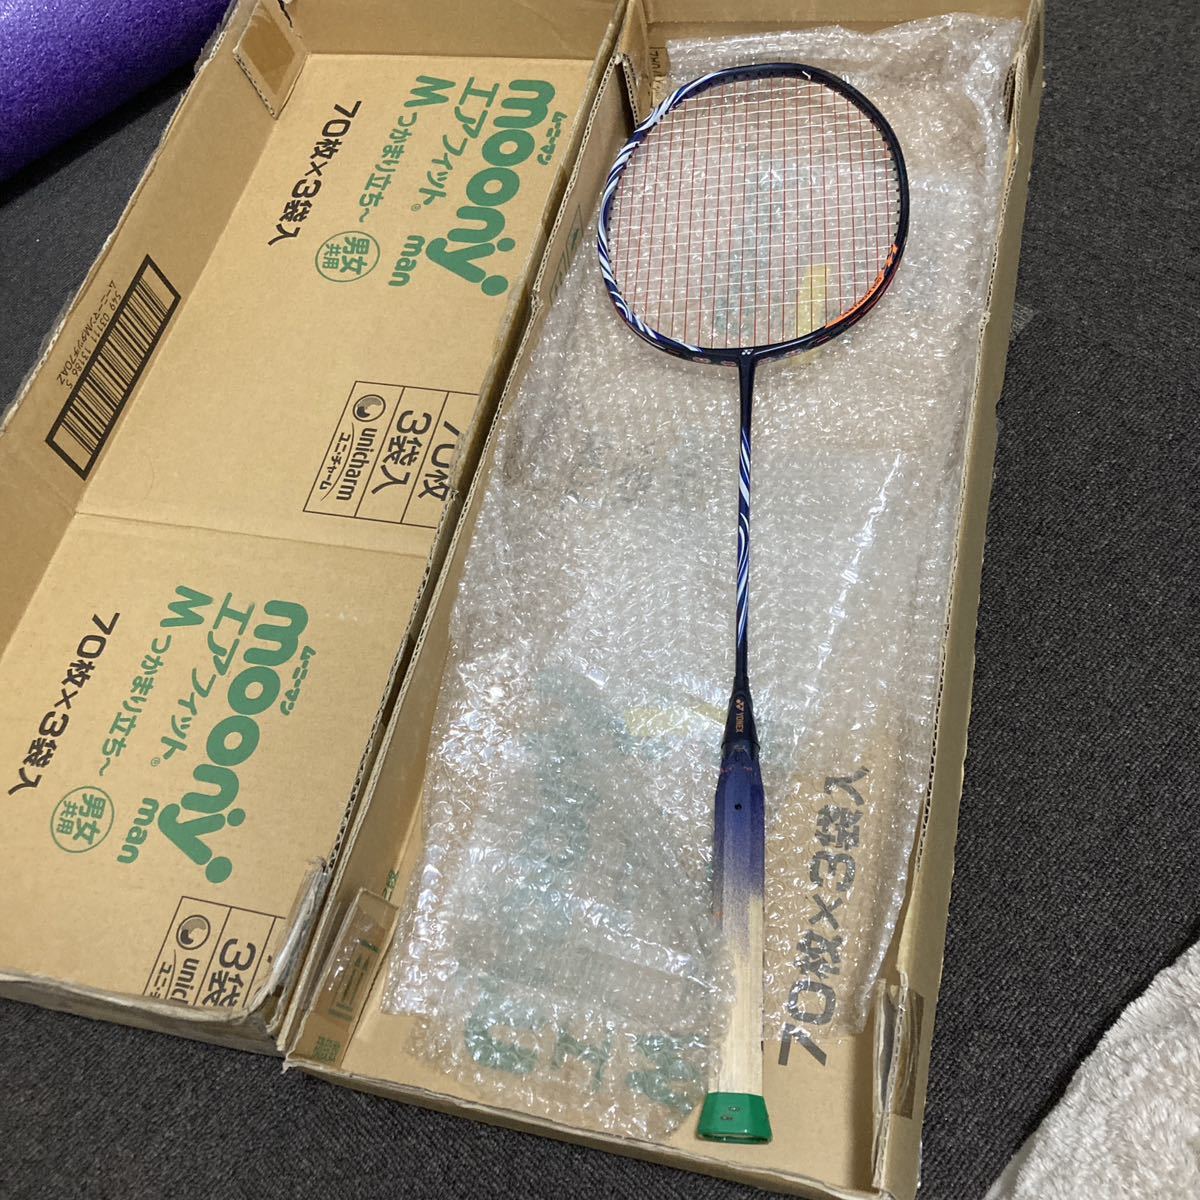  super-beauty goods YONEX badminton racket Astro ks100ZZ 4UG6 almost scratch less dark navy ASTROX 100 ZZ Yonex 